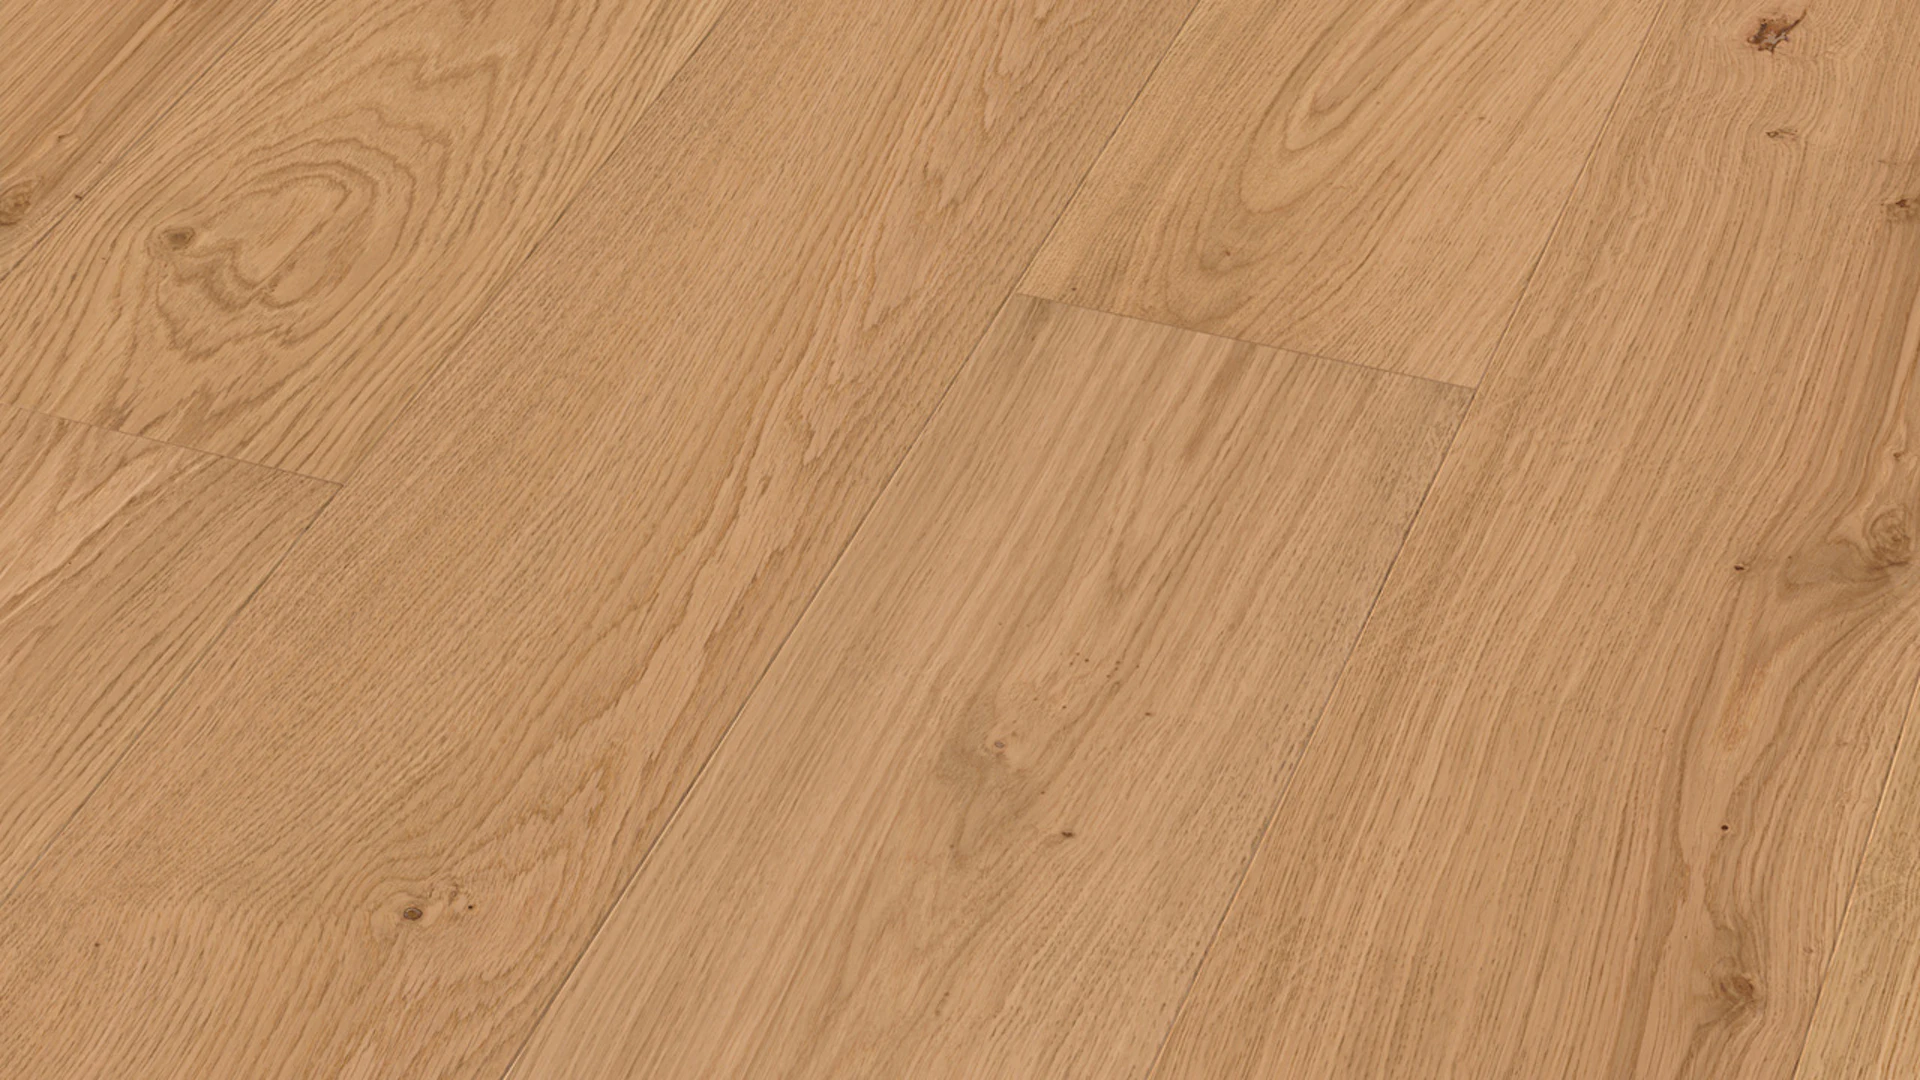 MEISTER Parquet Flooring - Lindura HD 400 Oak lively varnished (500013-2200205-08914)